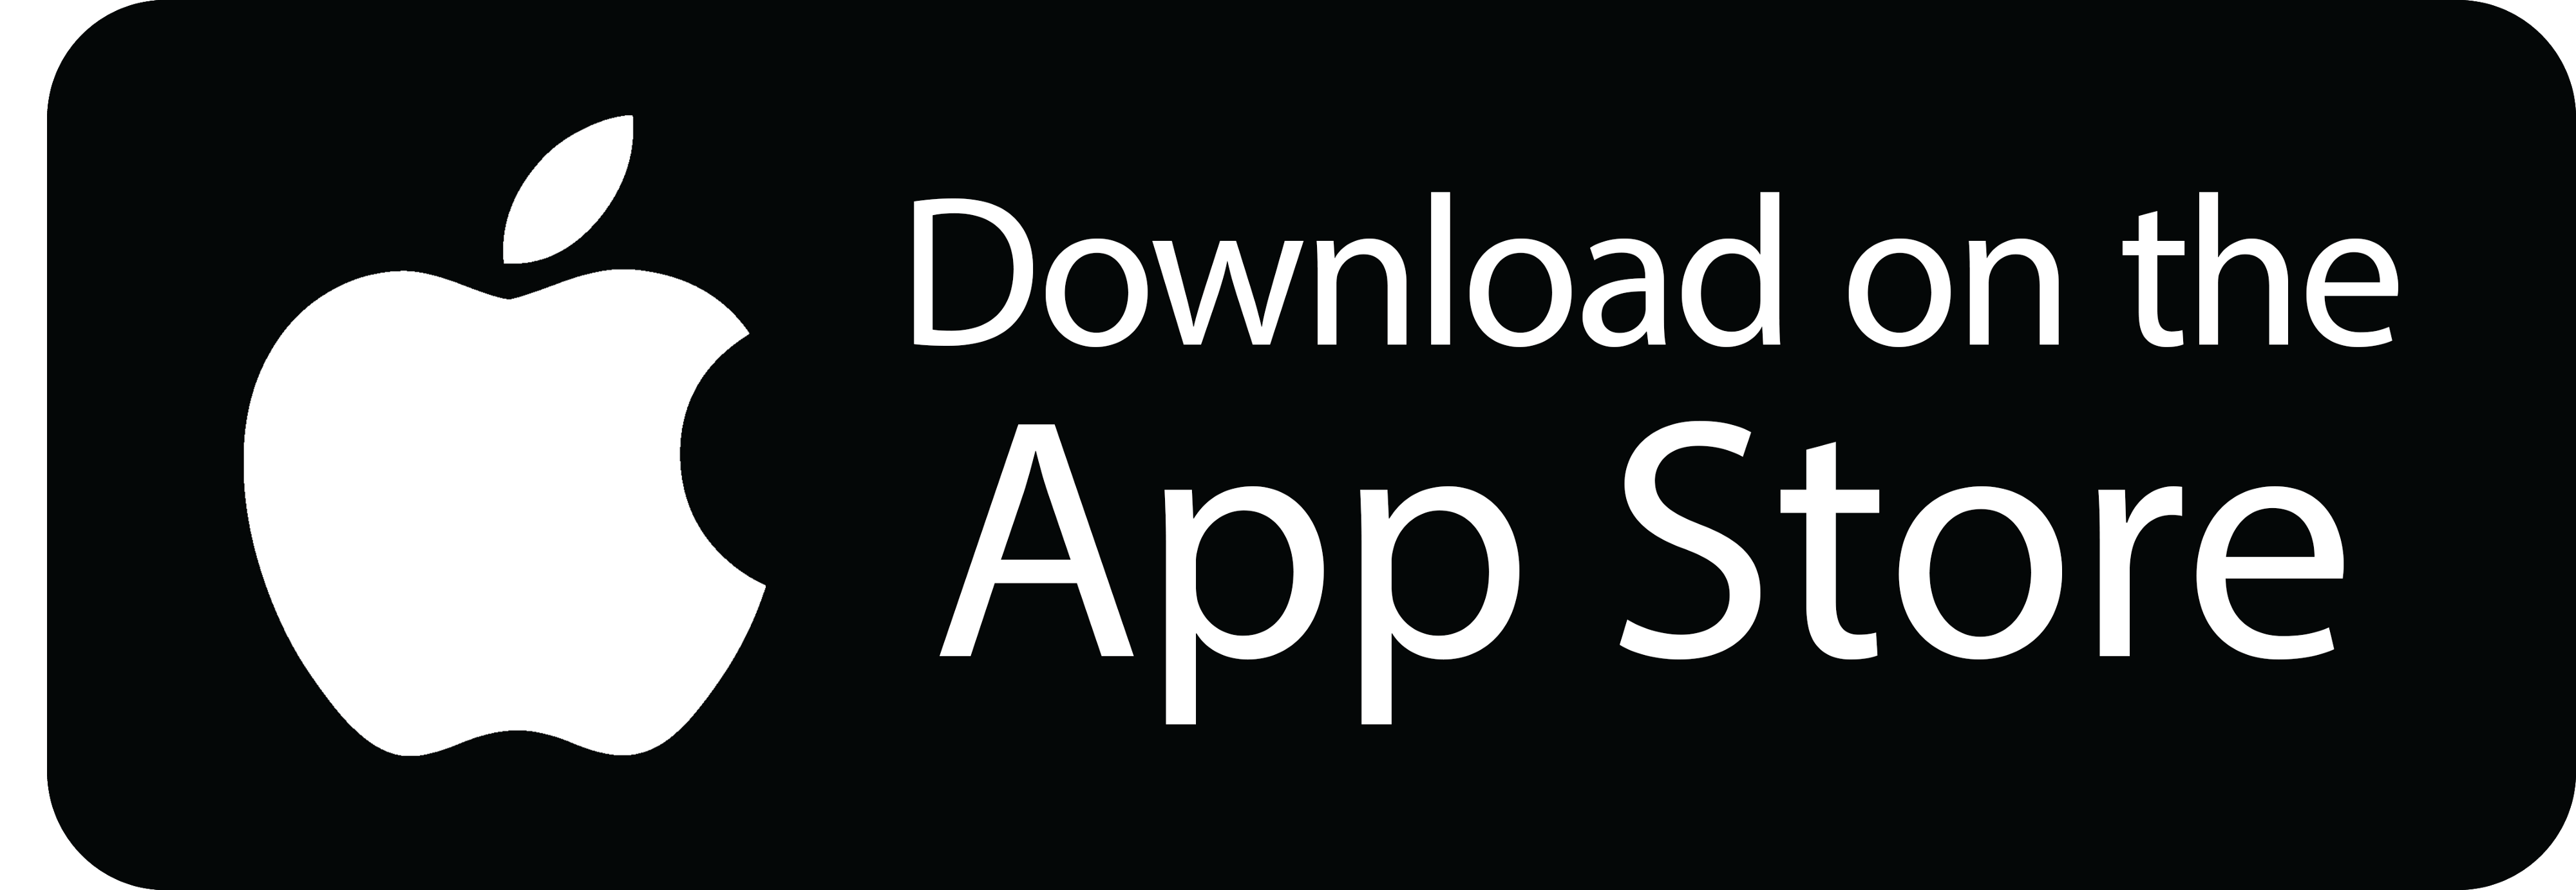 BTC Apple App Store